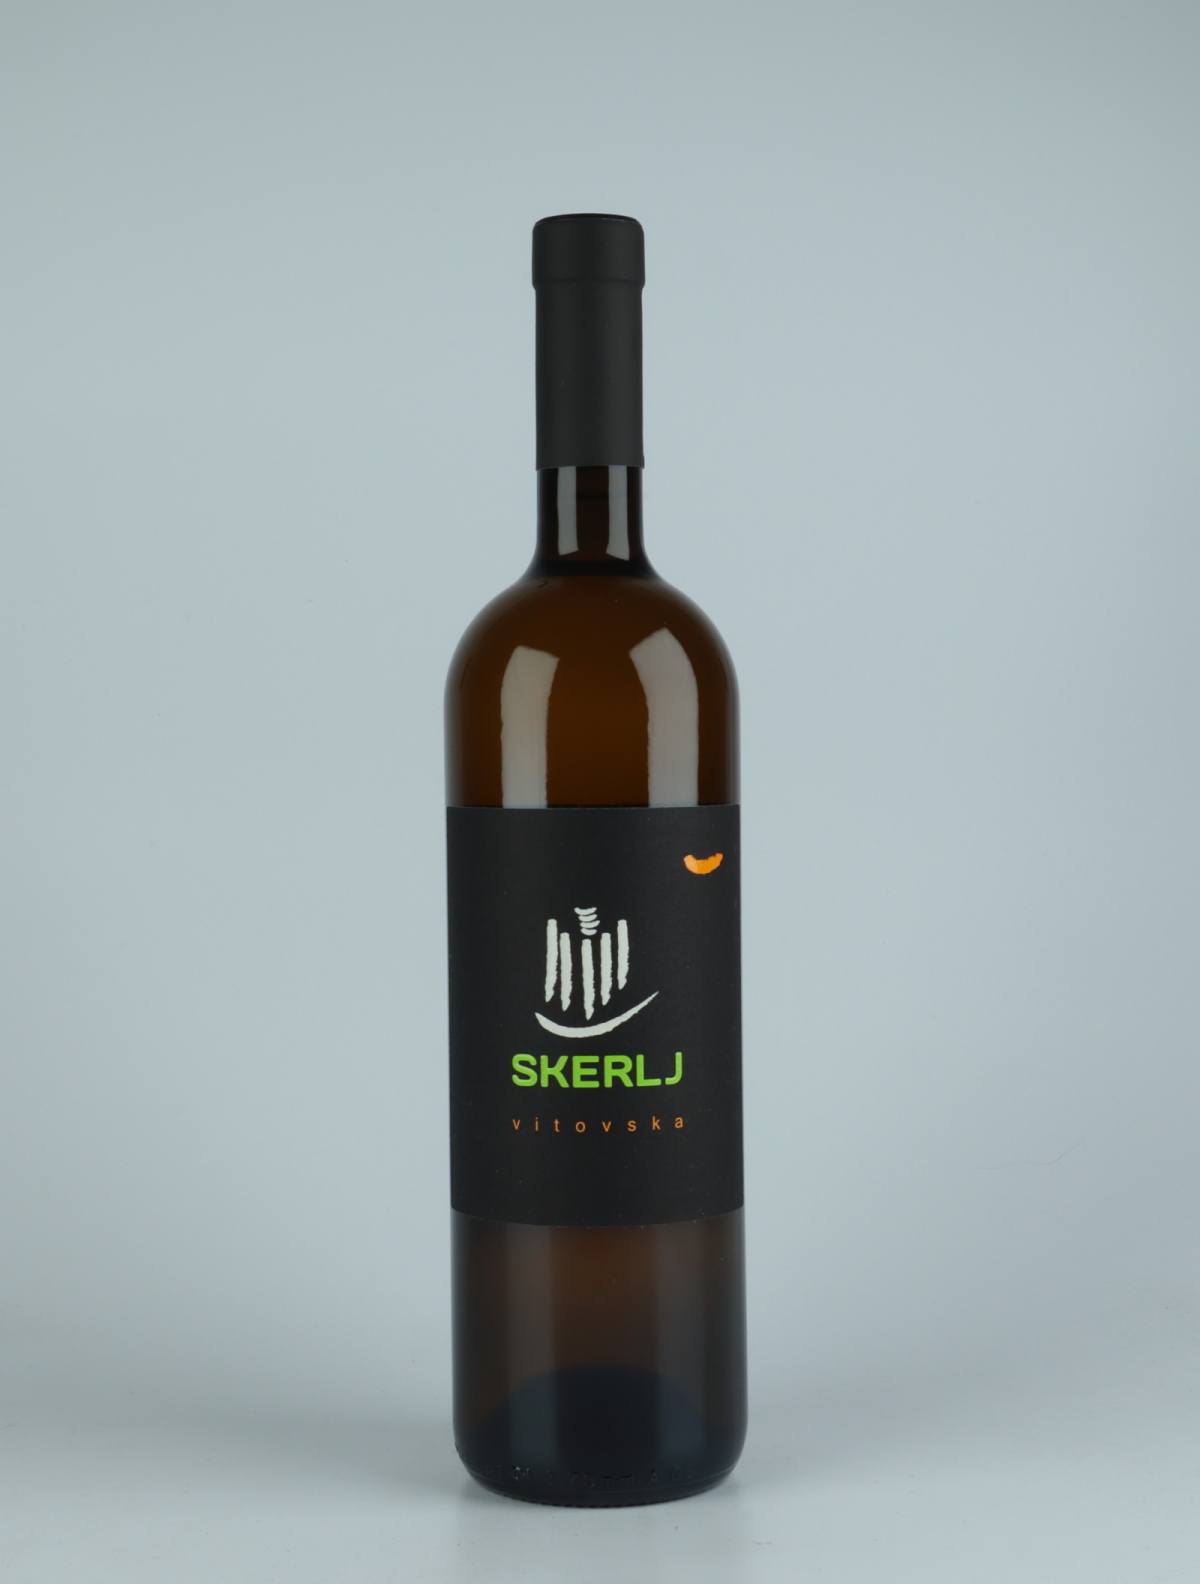 En flaske 2019 Vitovska Orange vin fra Skerlj, Friuli i Italien